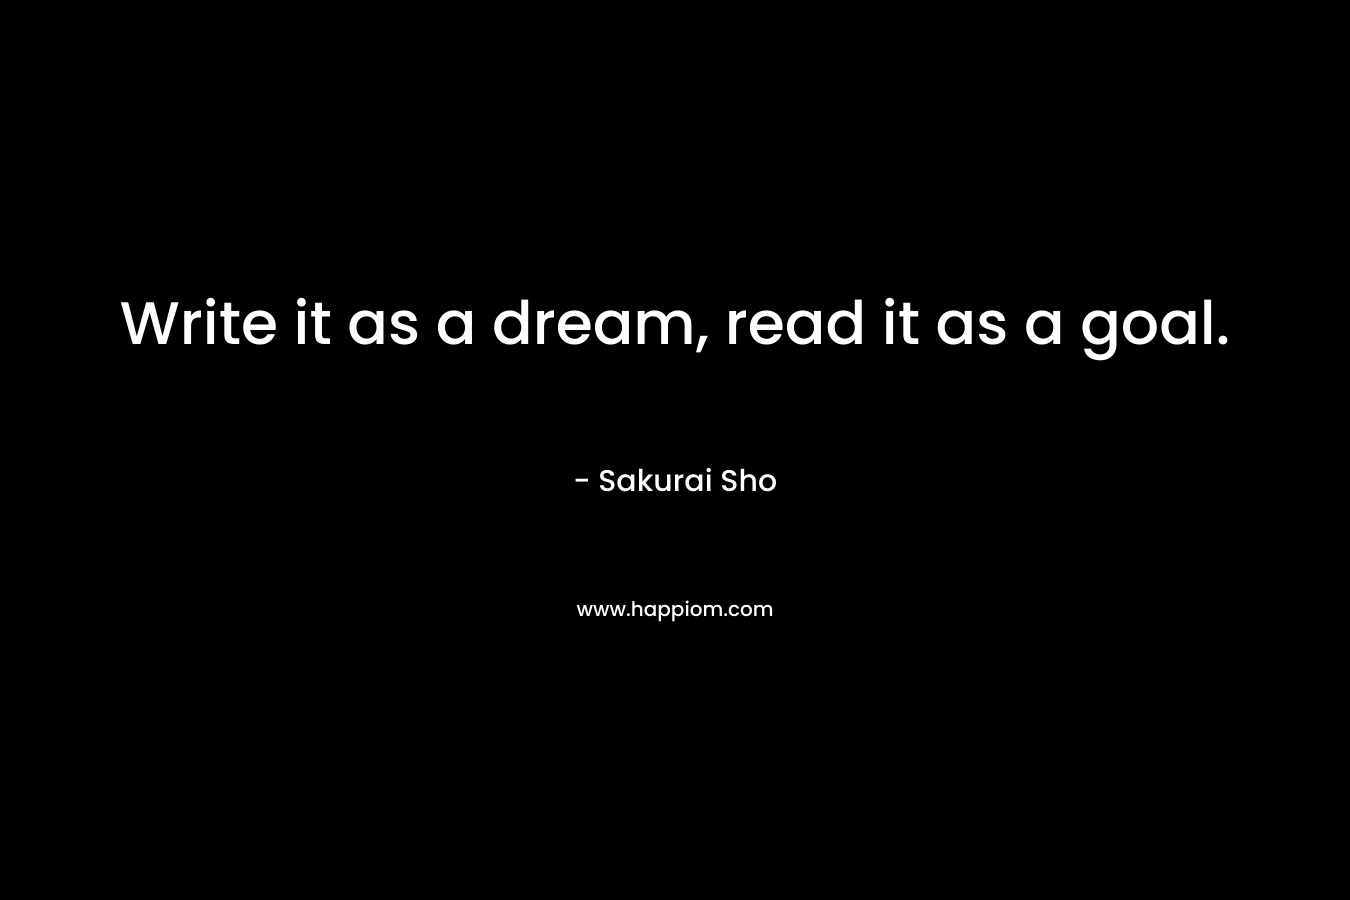 Write it as a dream, read it as a goal.